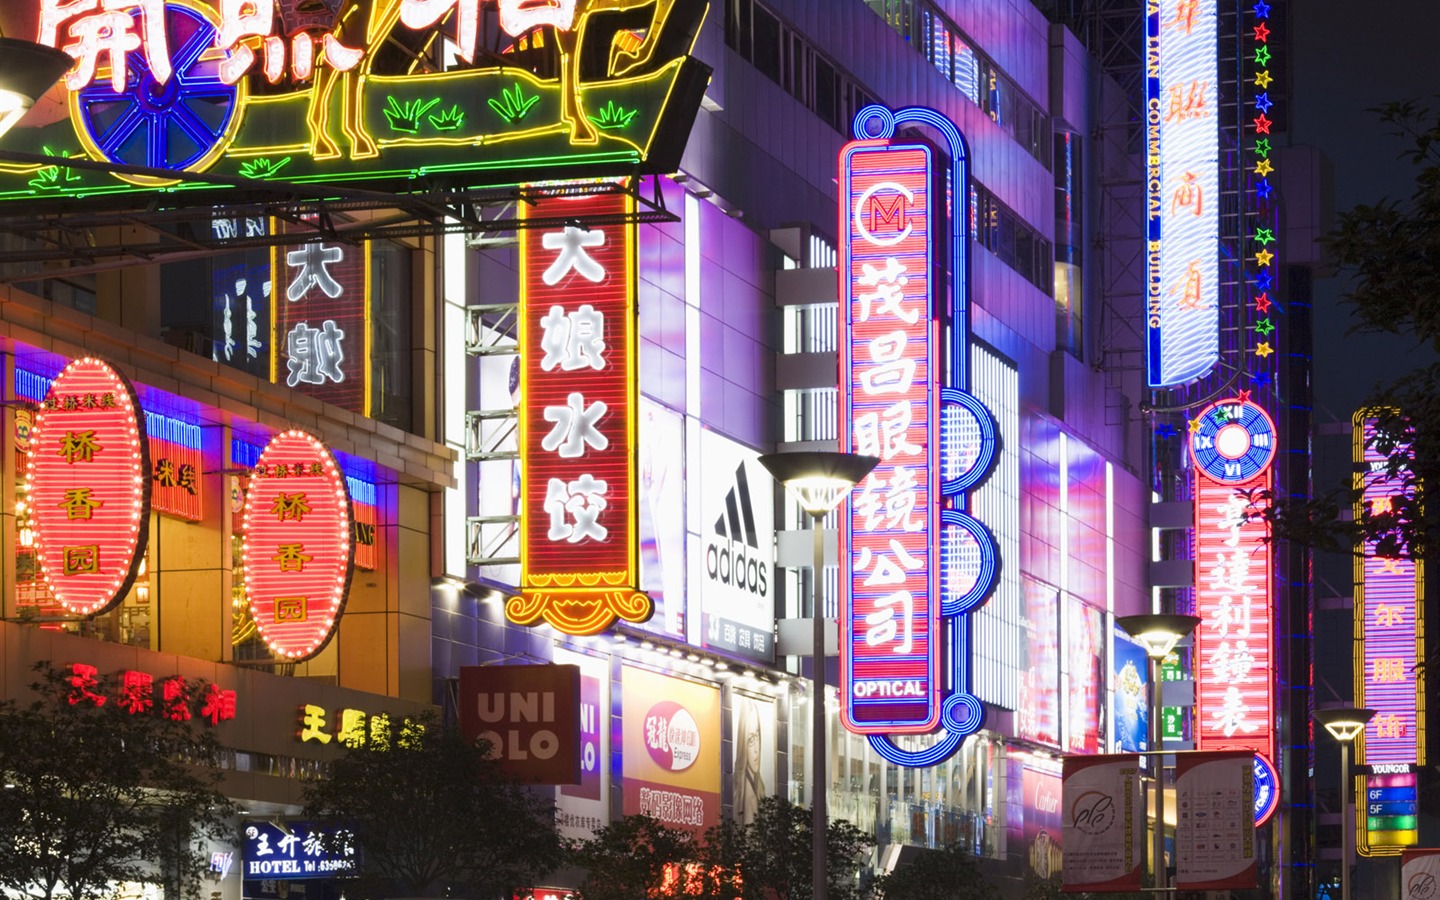 Vistazo de fondos de pantalla urbanas de China #14 - 1440x900